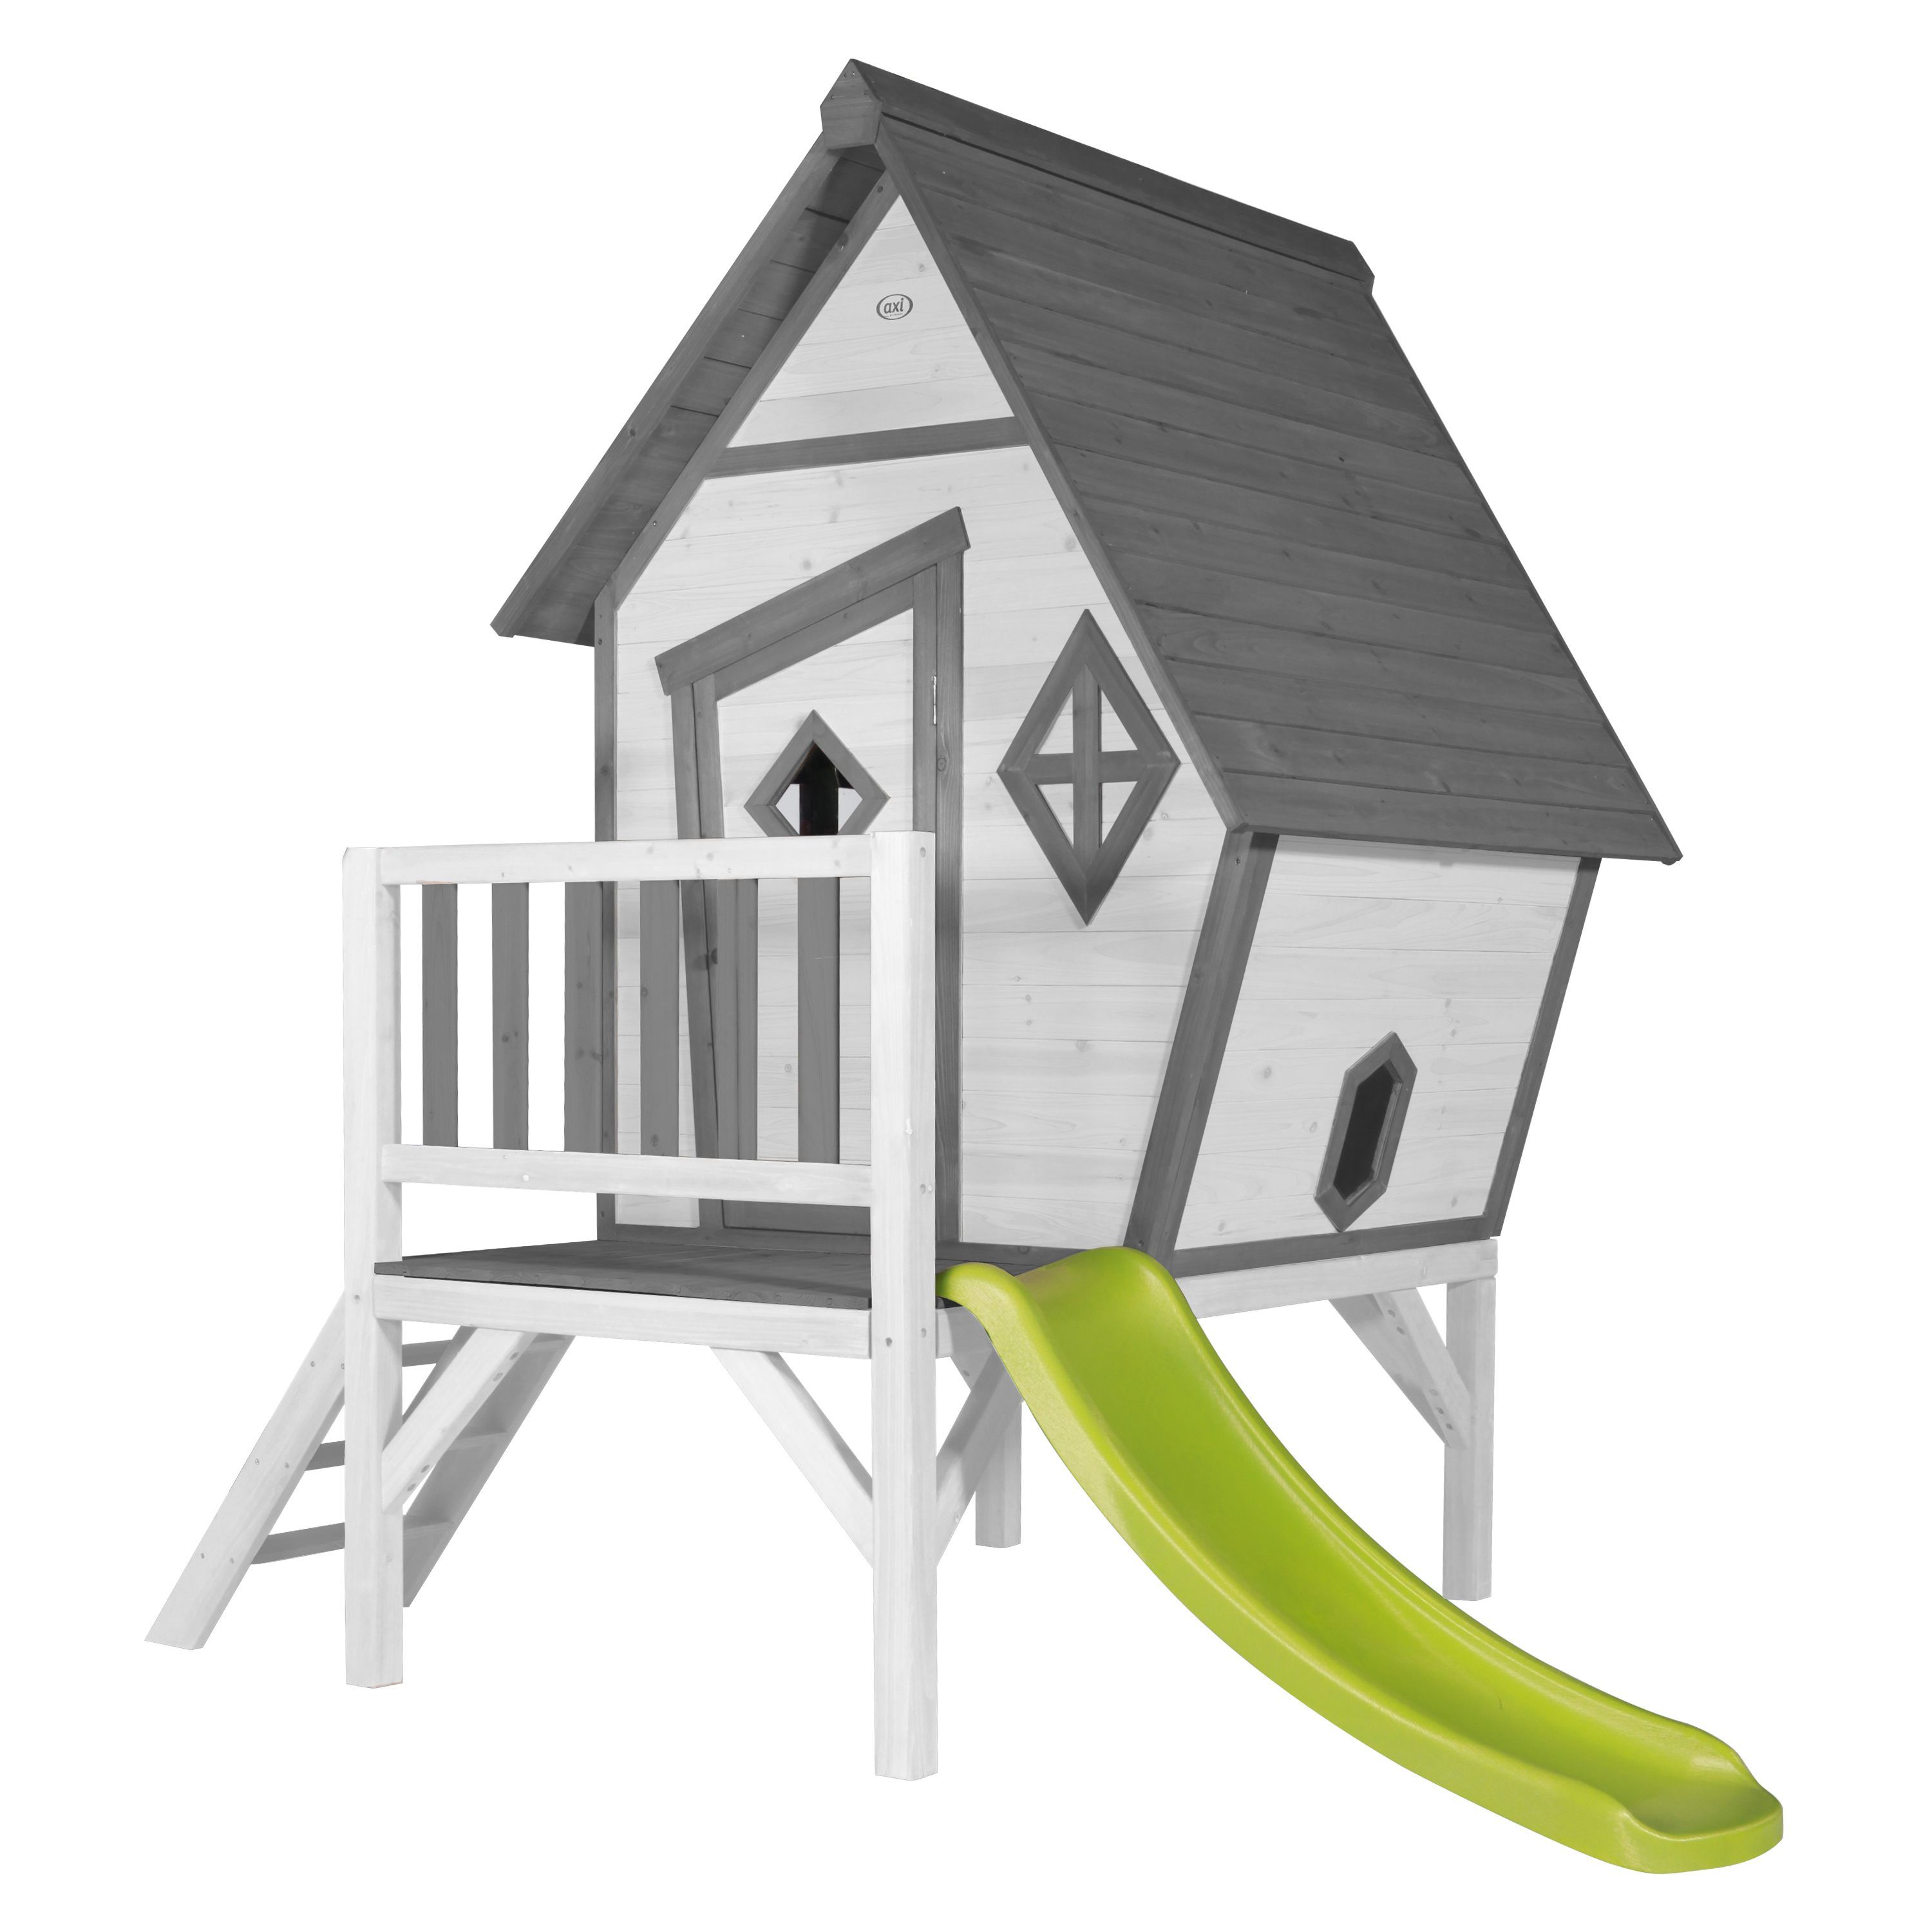 Cabin XL Playhouse Grey/White - Lime Green Slide